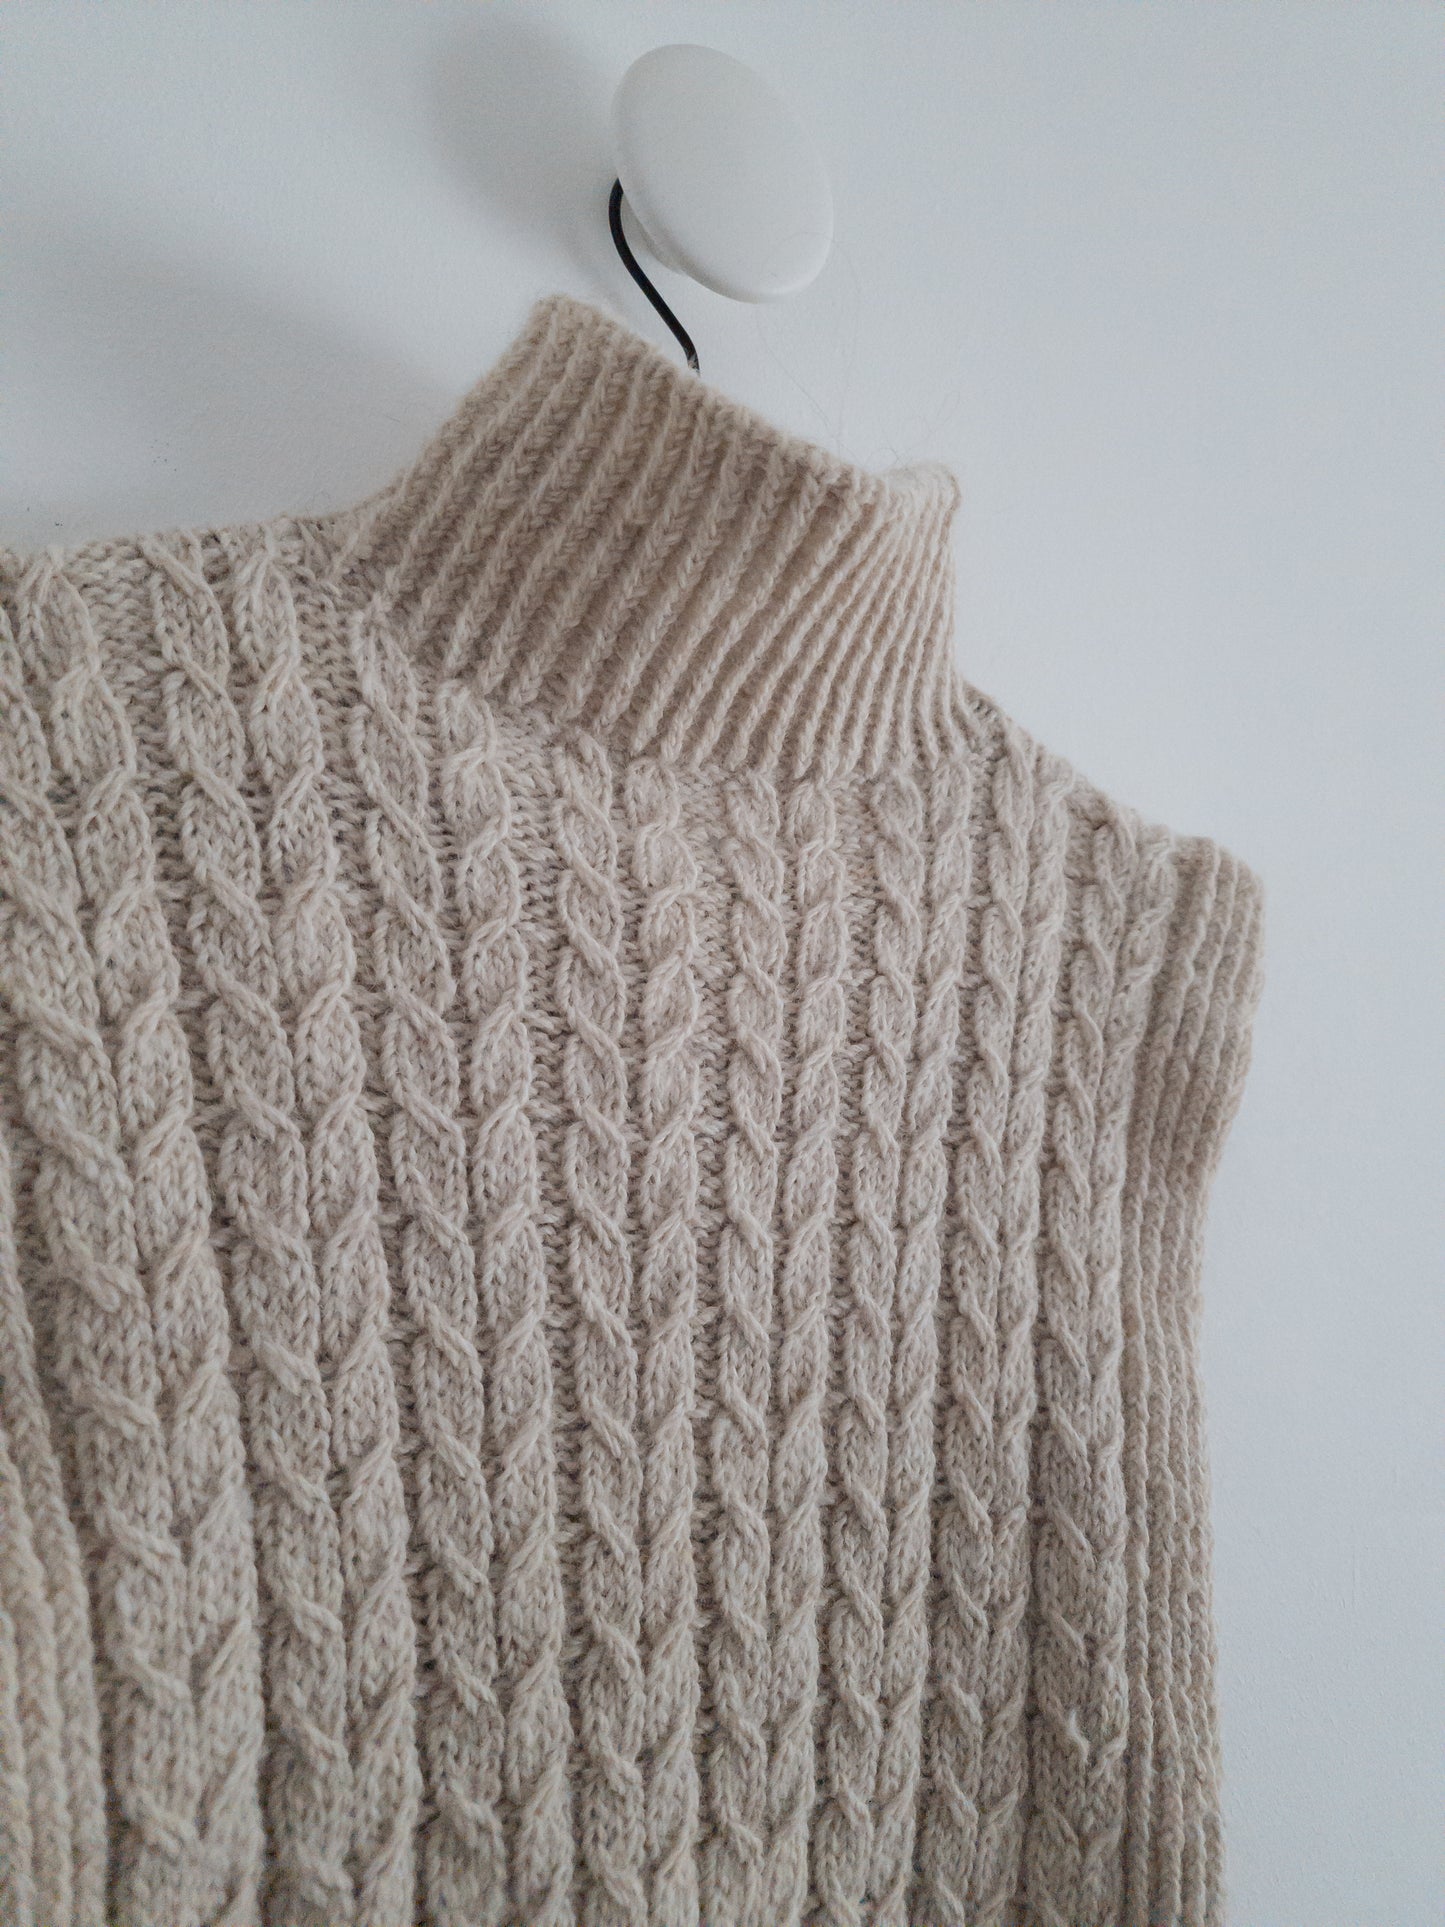 Imagine Spring Cowl - Knitting Pattern